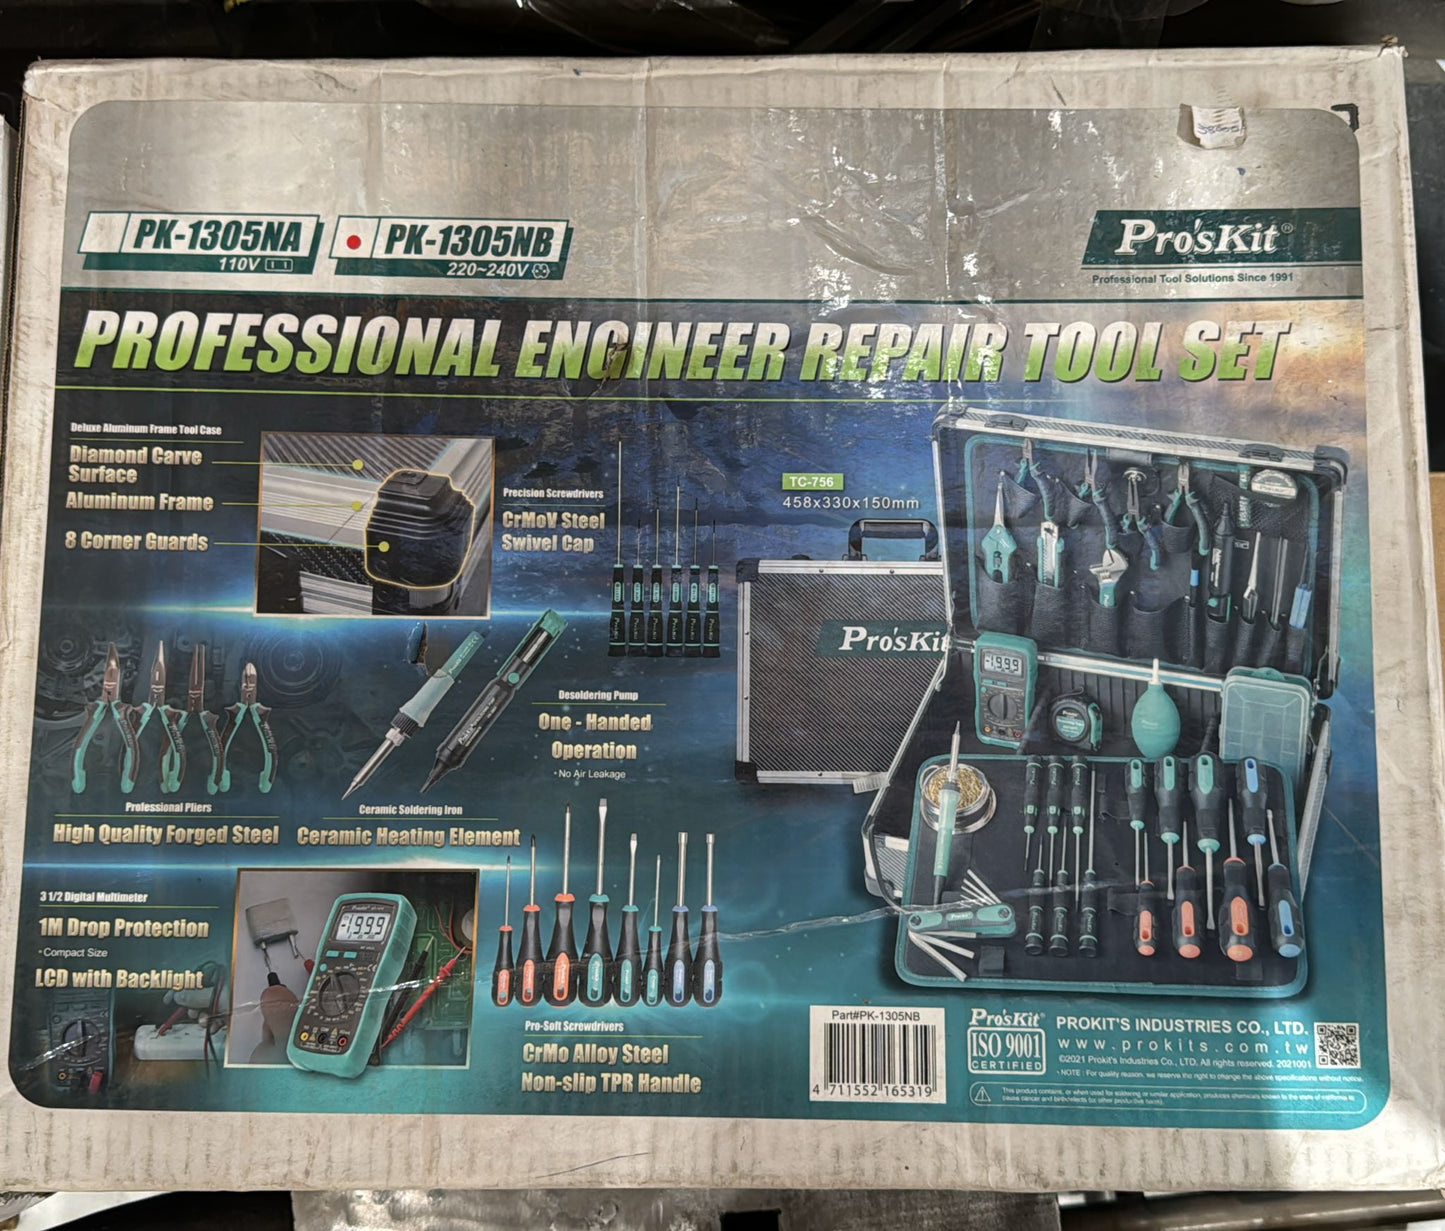 Proskit PK-1305NB is a professional engineer repair tool set